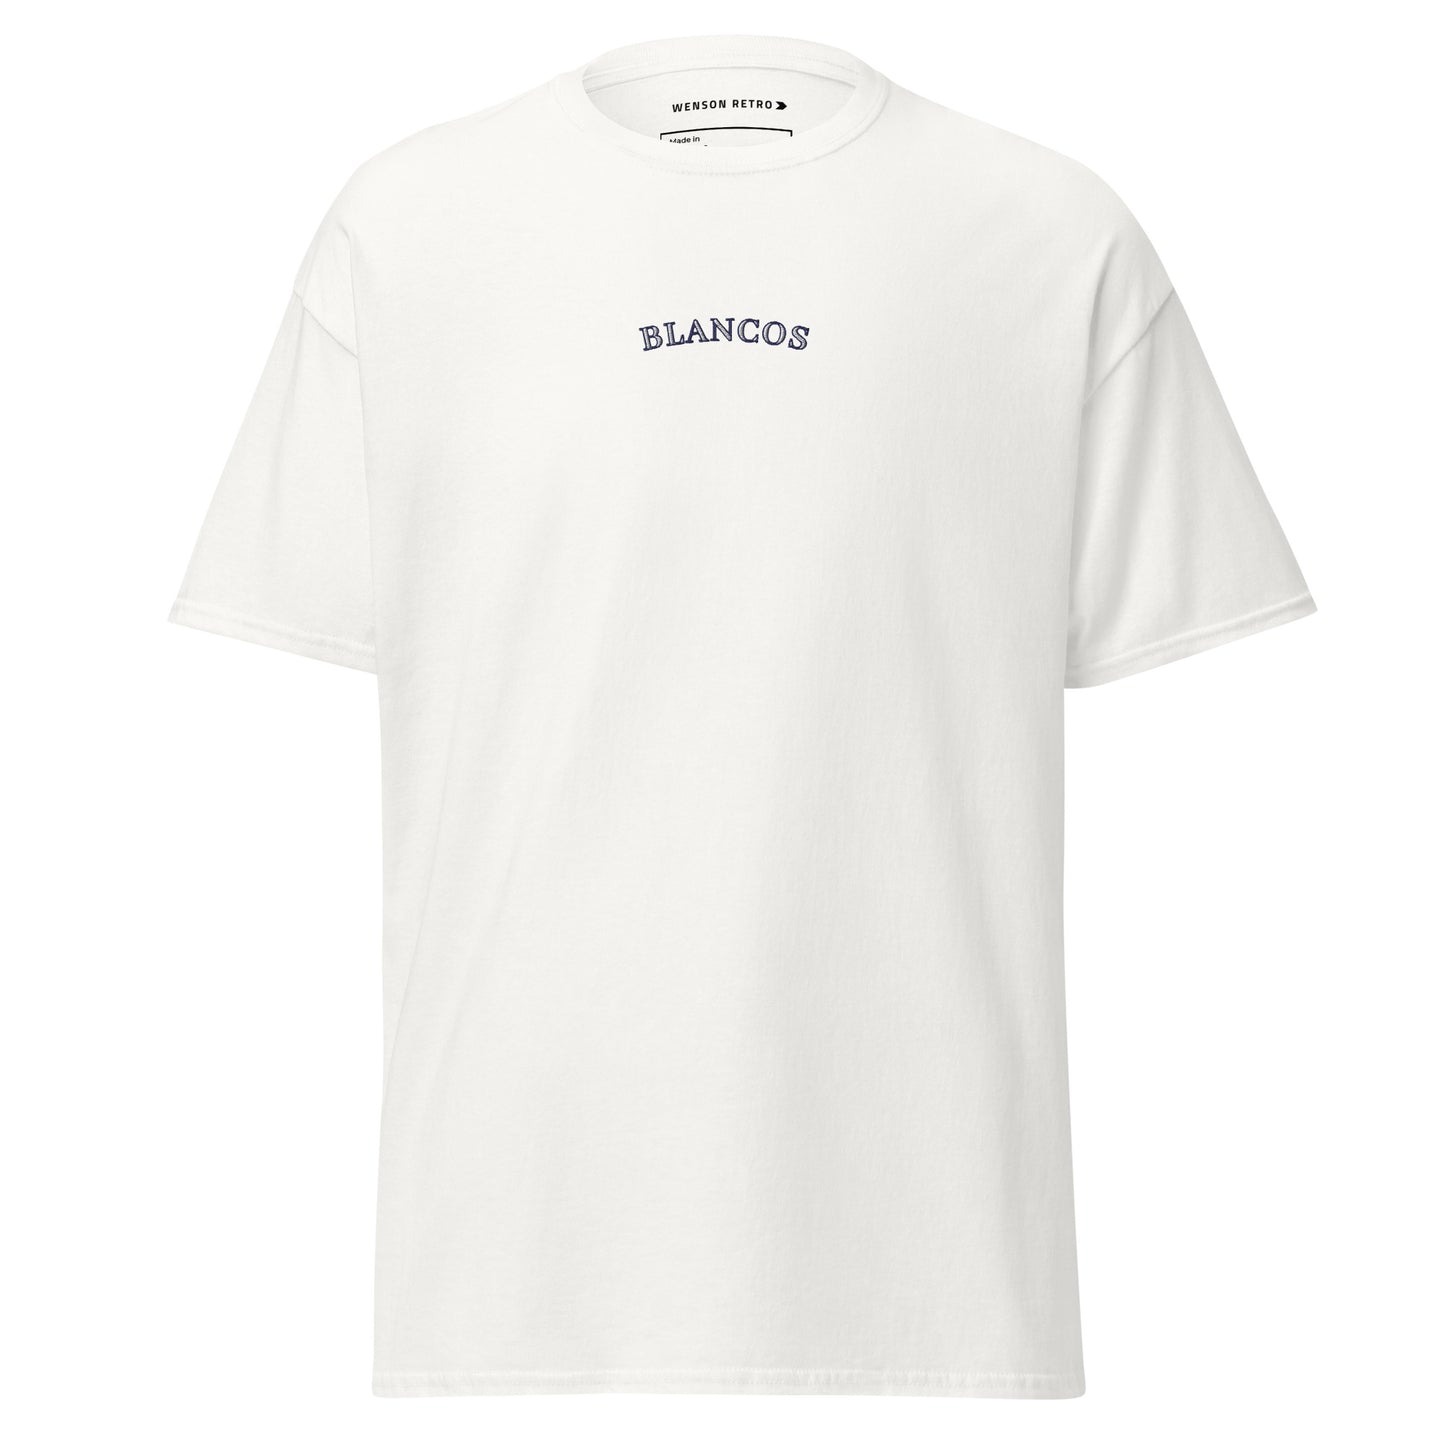 Blancos Signature T-Shirt